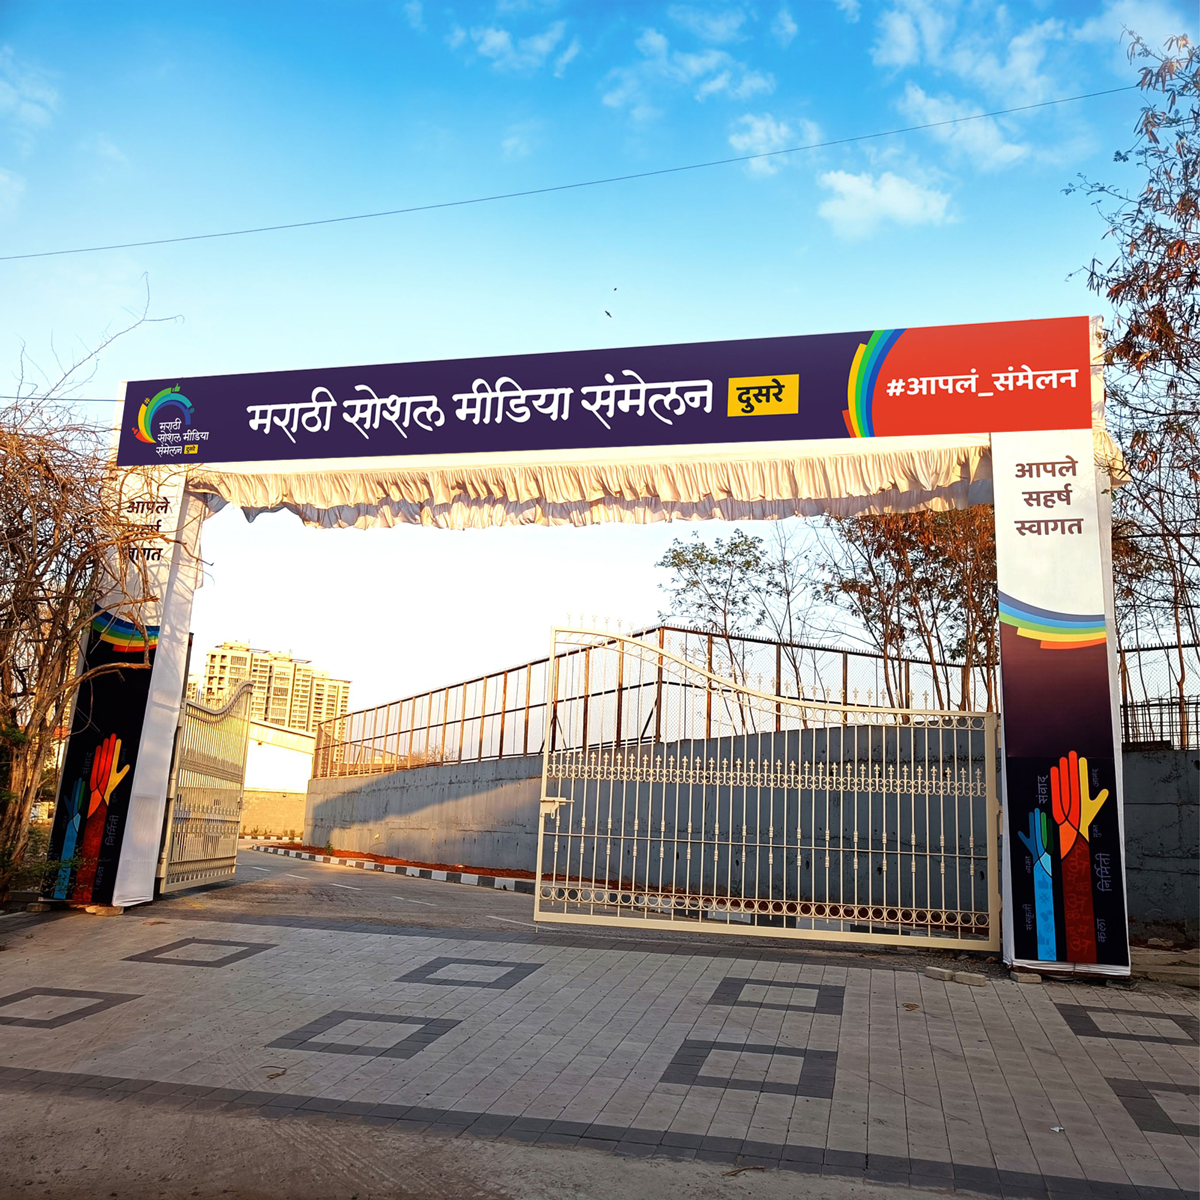 Marathi Social Media Sammelan Entry gate flex image